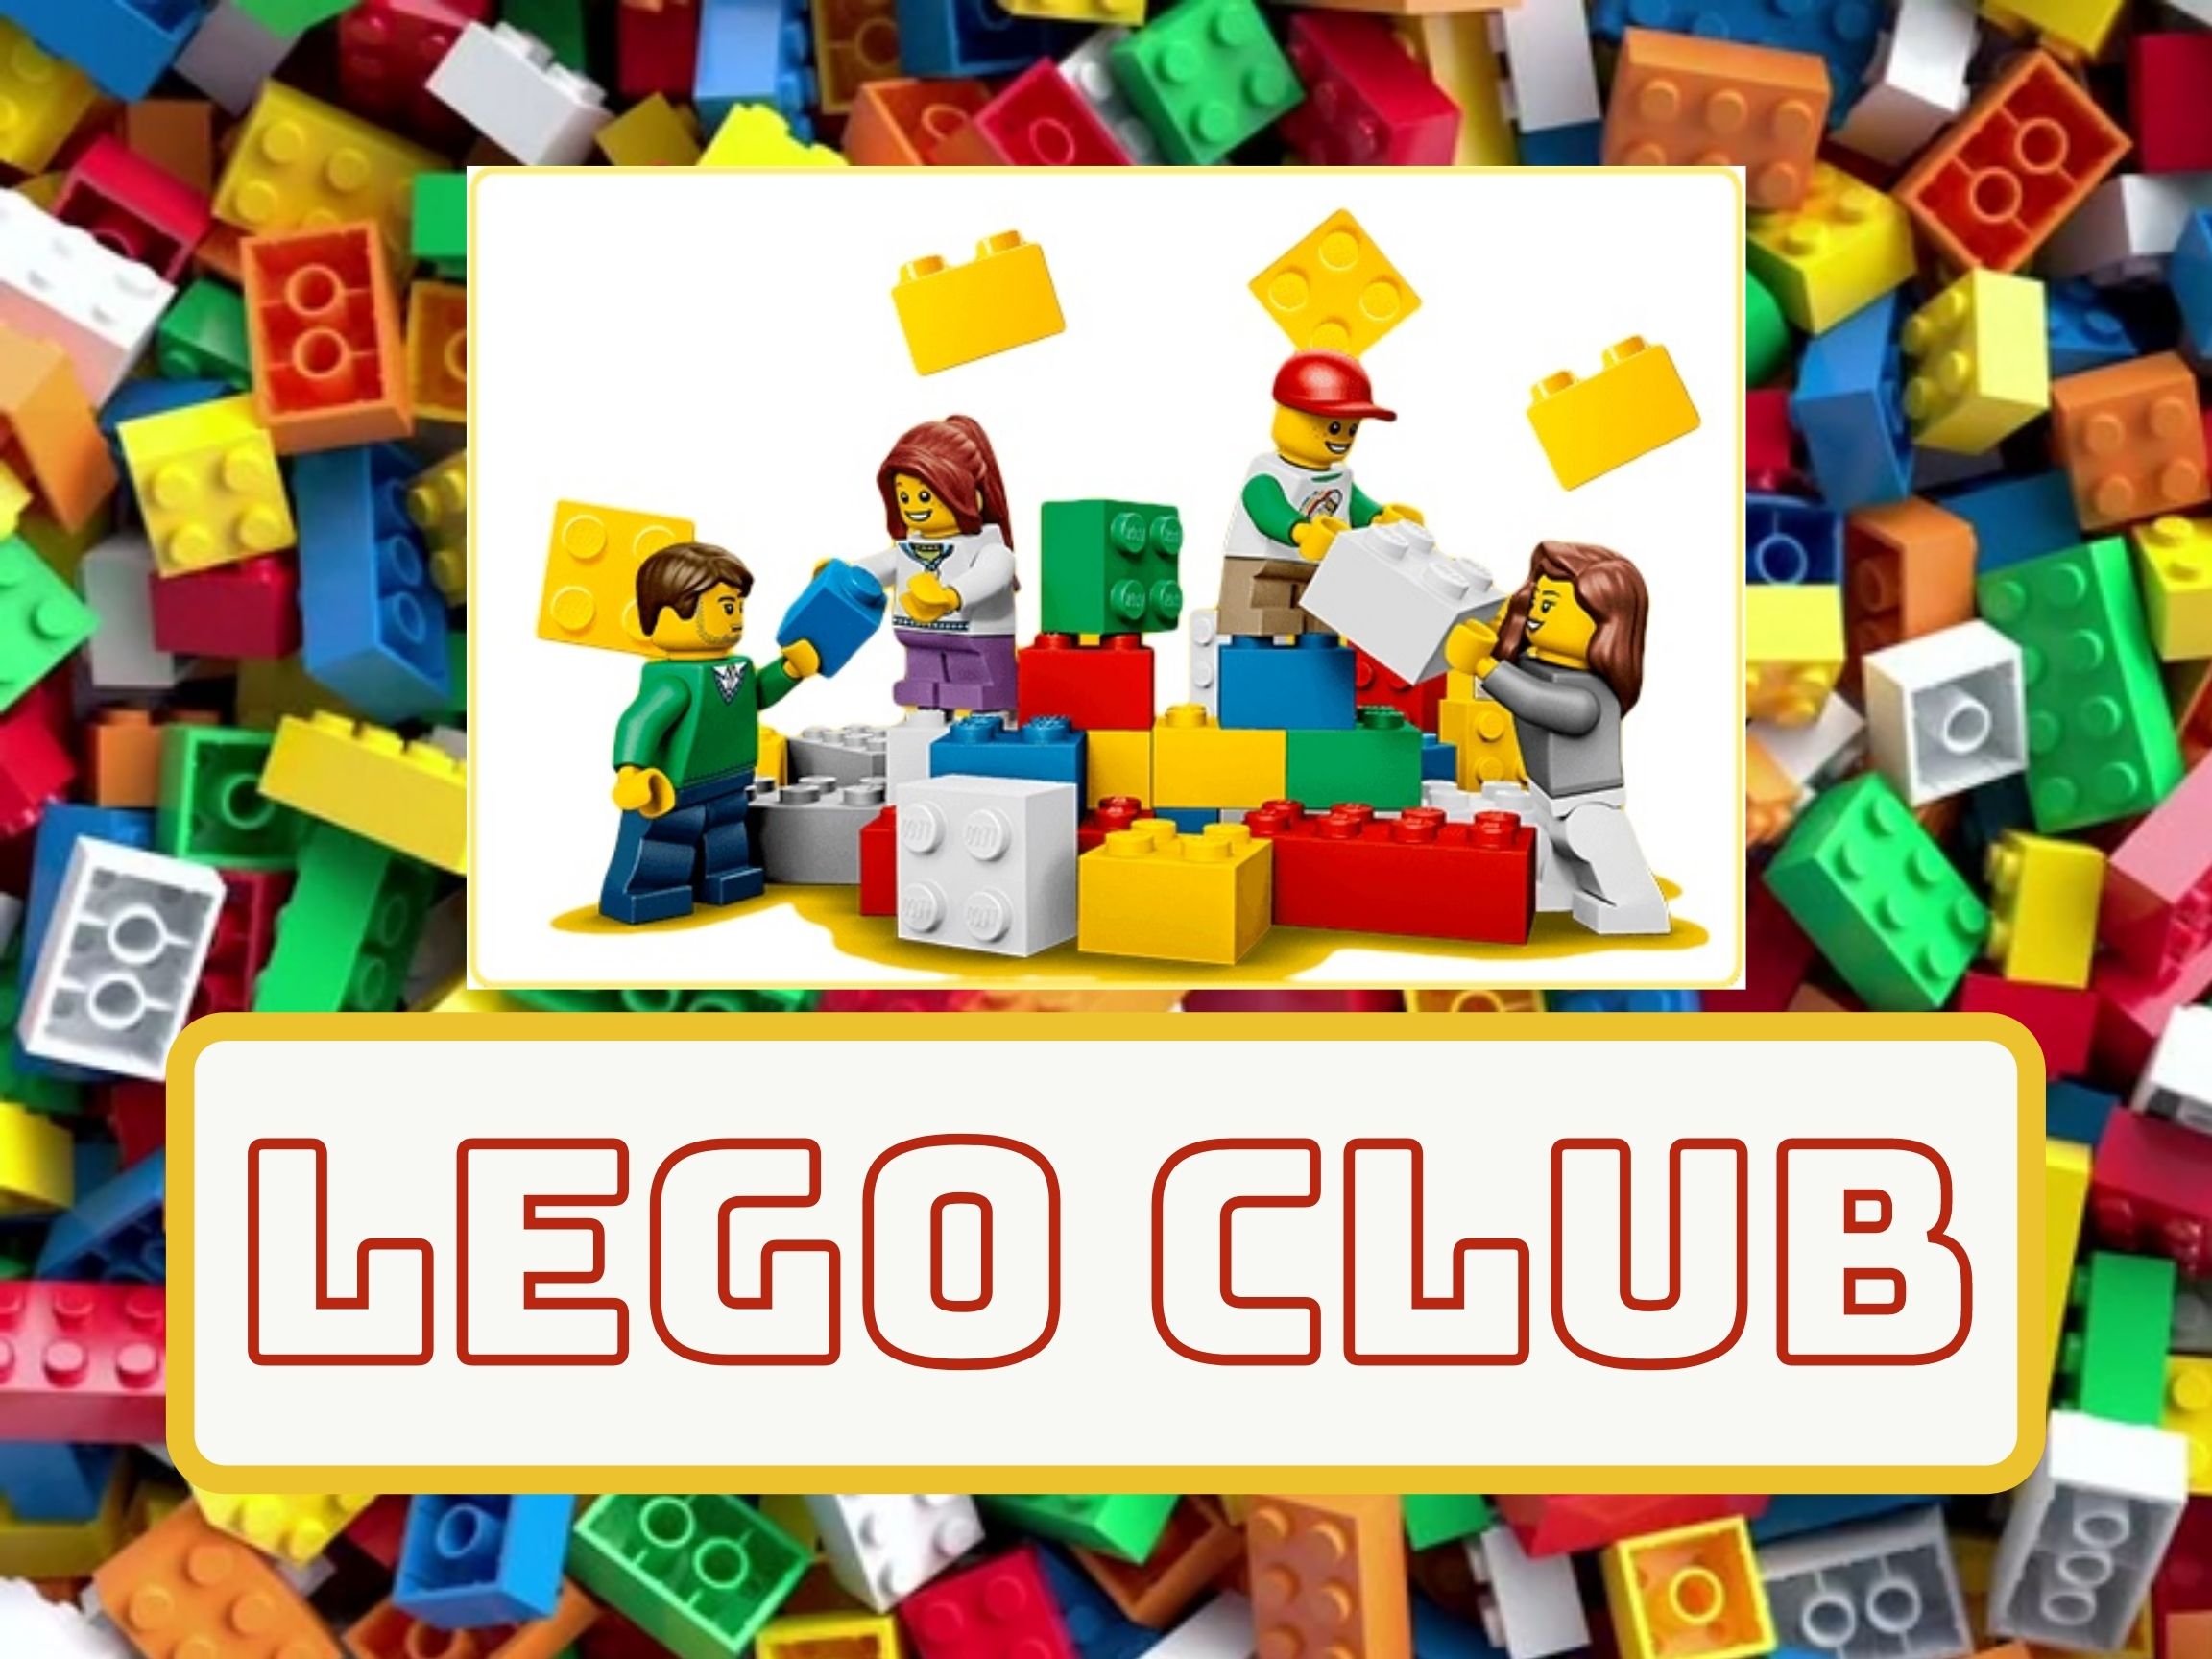 Forbipasserende Lake Taupo Problemer Lego Club – Chillicothe Public Library